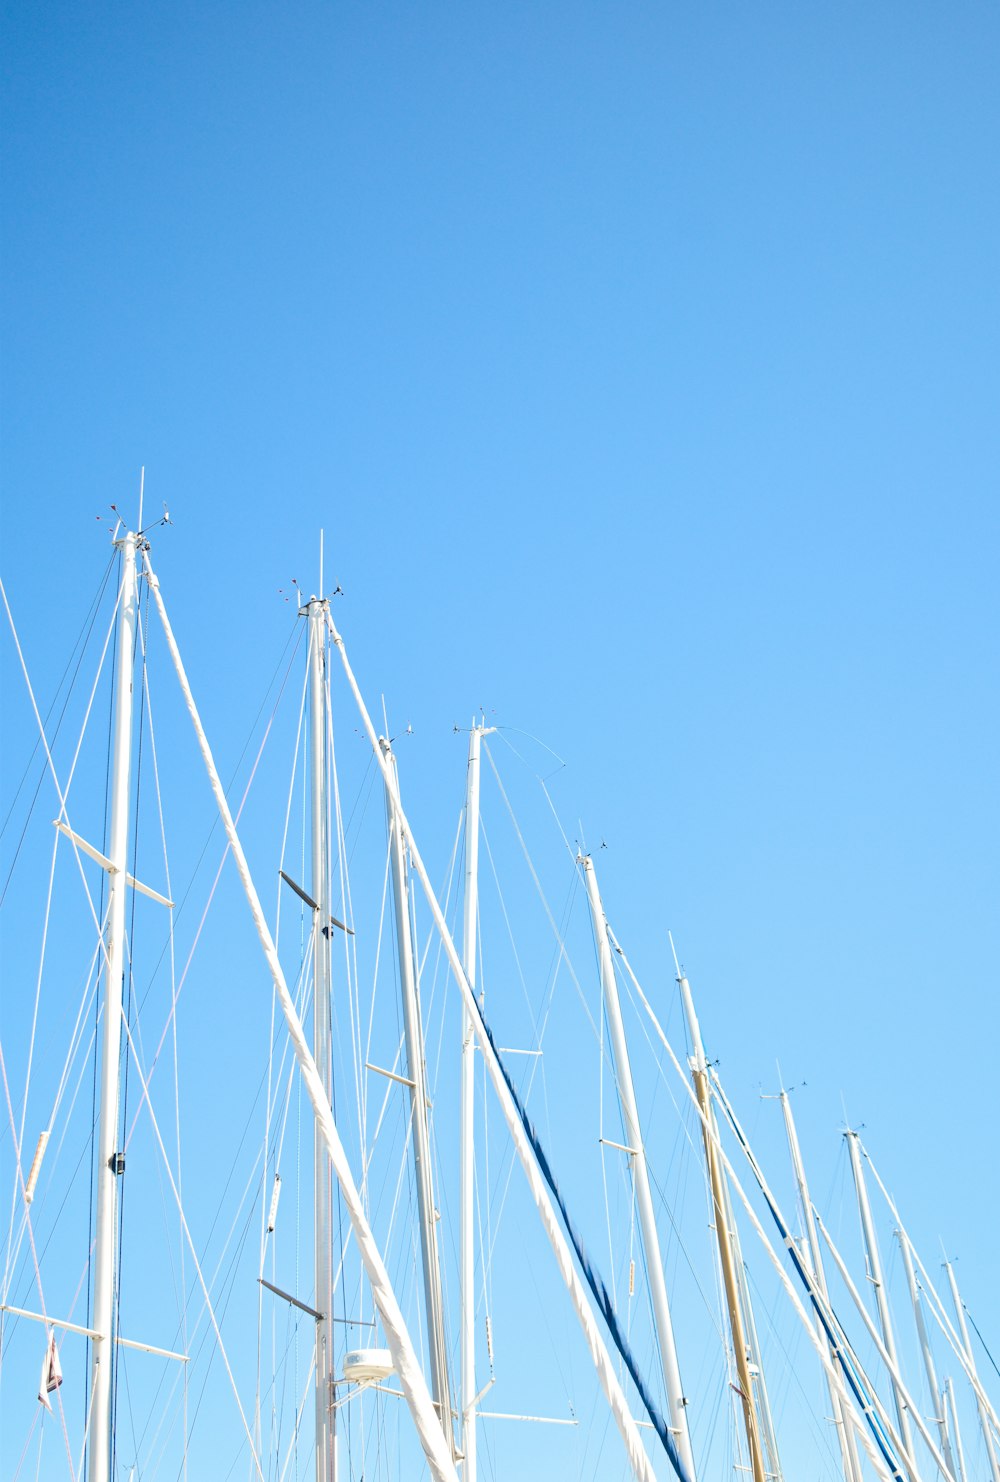 white metal poles under blue sky during daytime